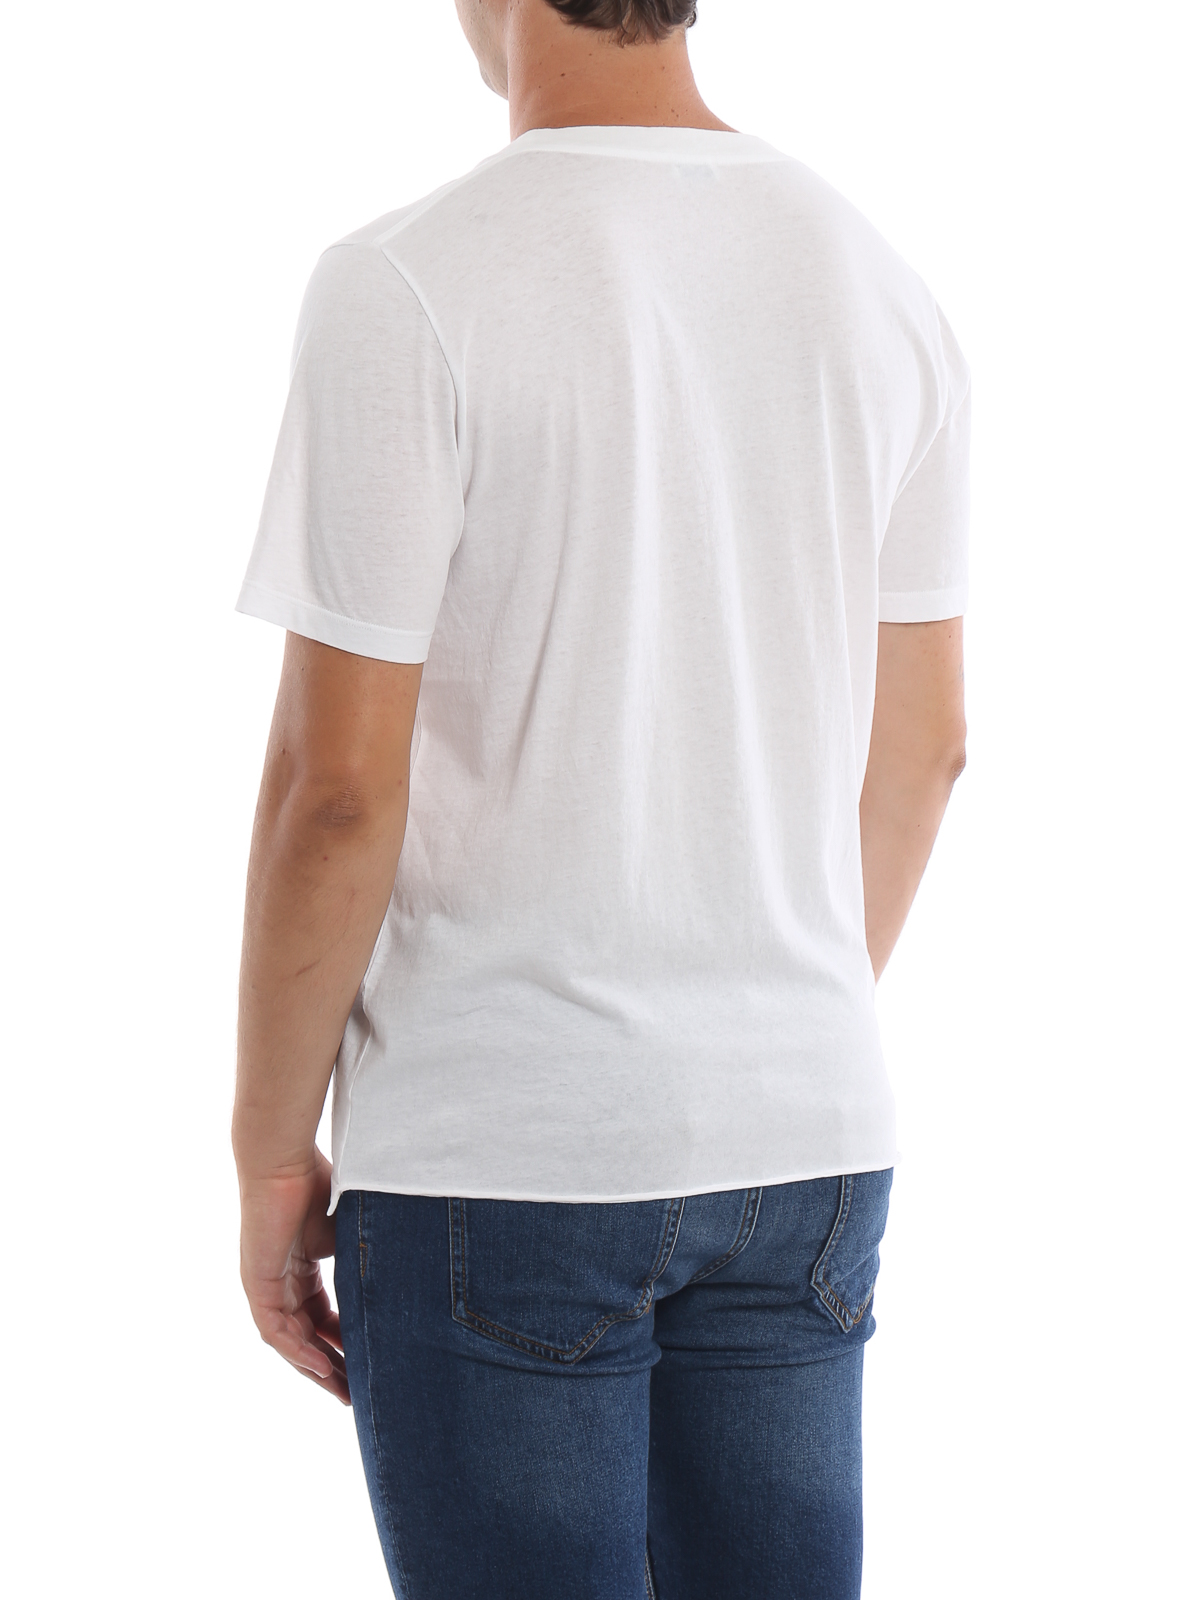 Afgeschaft versneller gezantschap T-shirts Saint Laurent - White cotton sentences basic Tee - 529612YB2UE9744